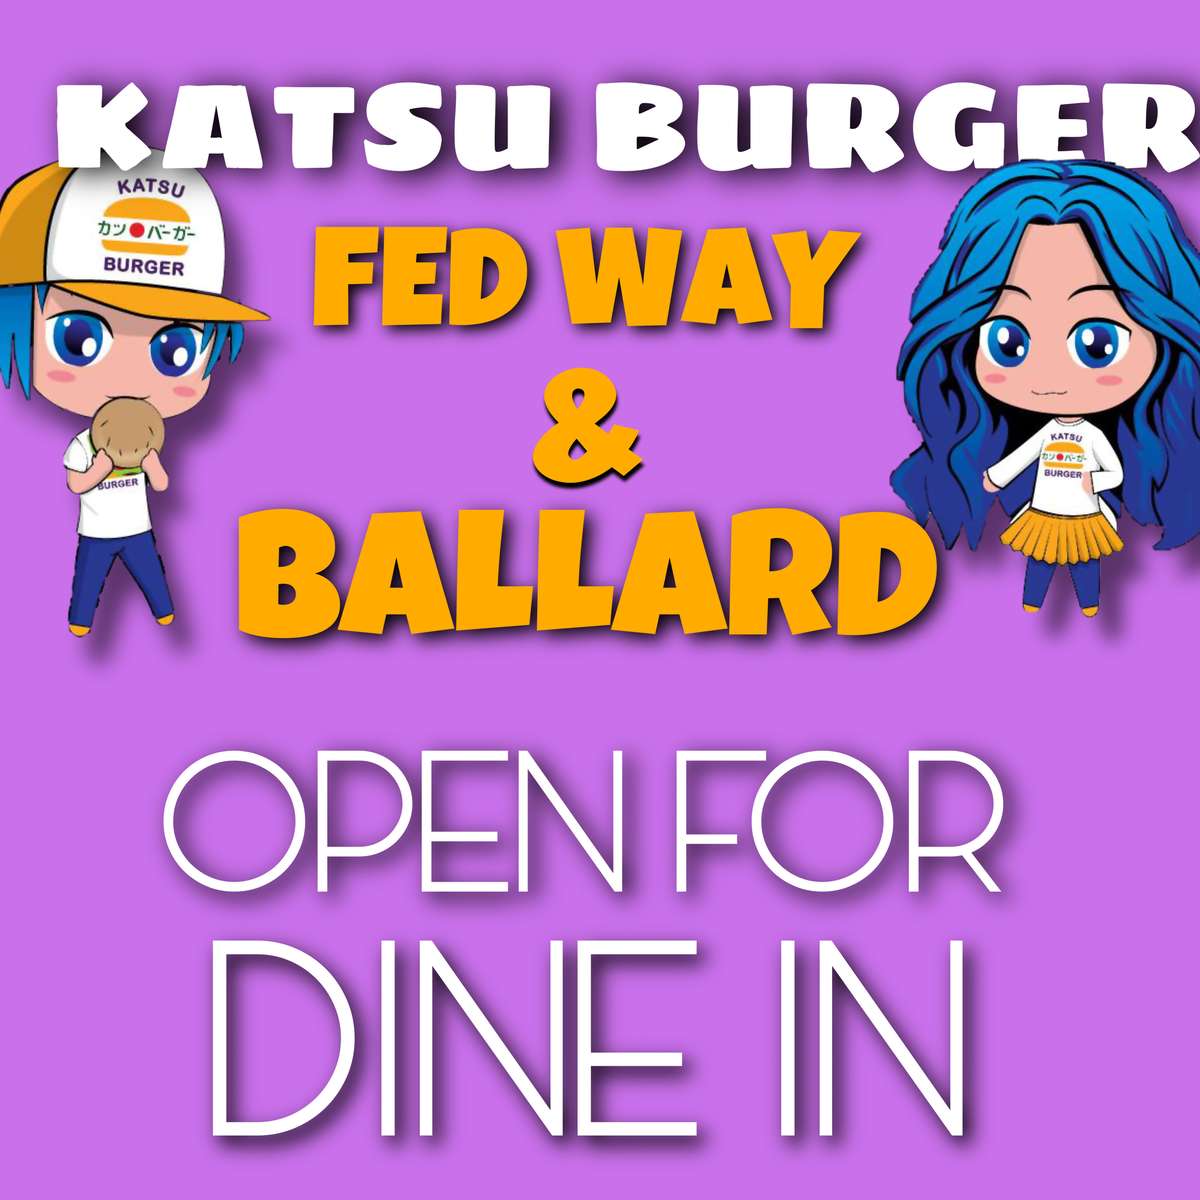 katsu burger fed way and ballard open for dine in